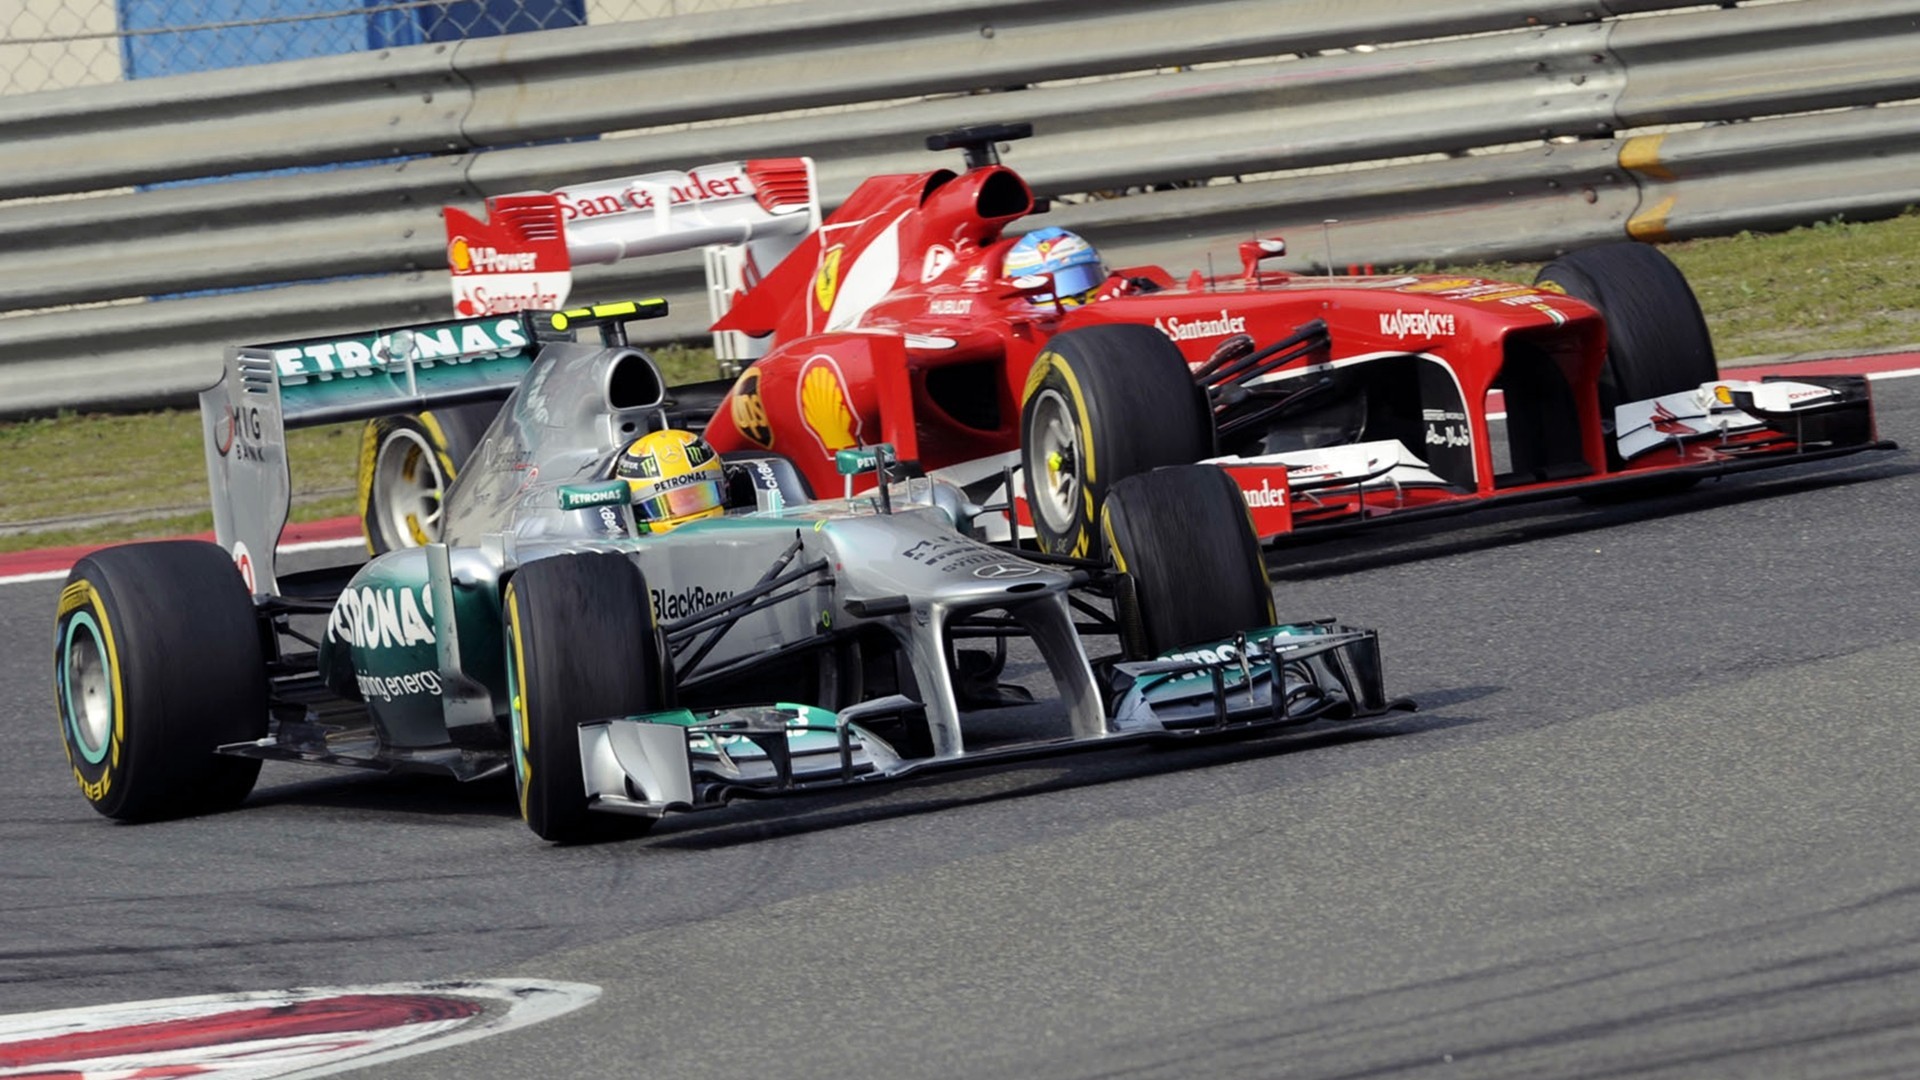 Fernando Alonso Ferrari Lewis Hamilton Formula 1 Mercedes Amg Petronas Wallpapers Hd Desktop And Mobile Backgrounds